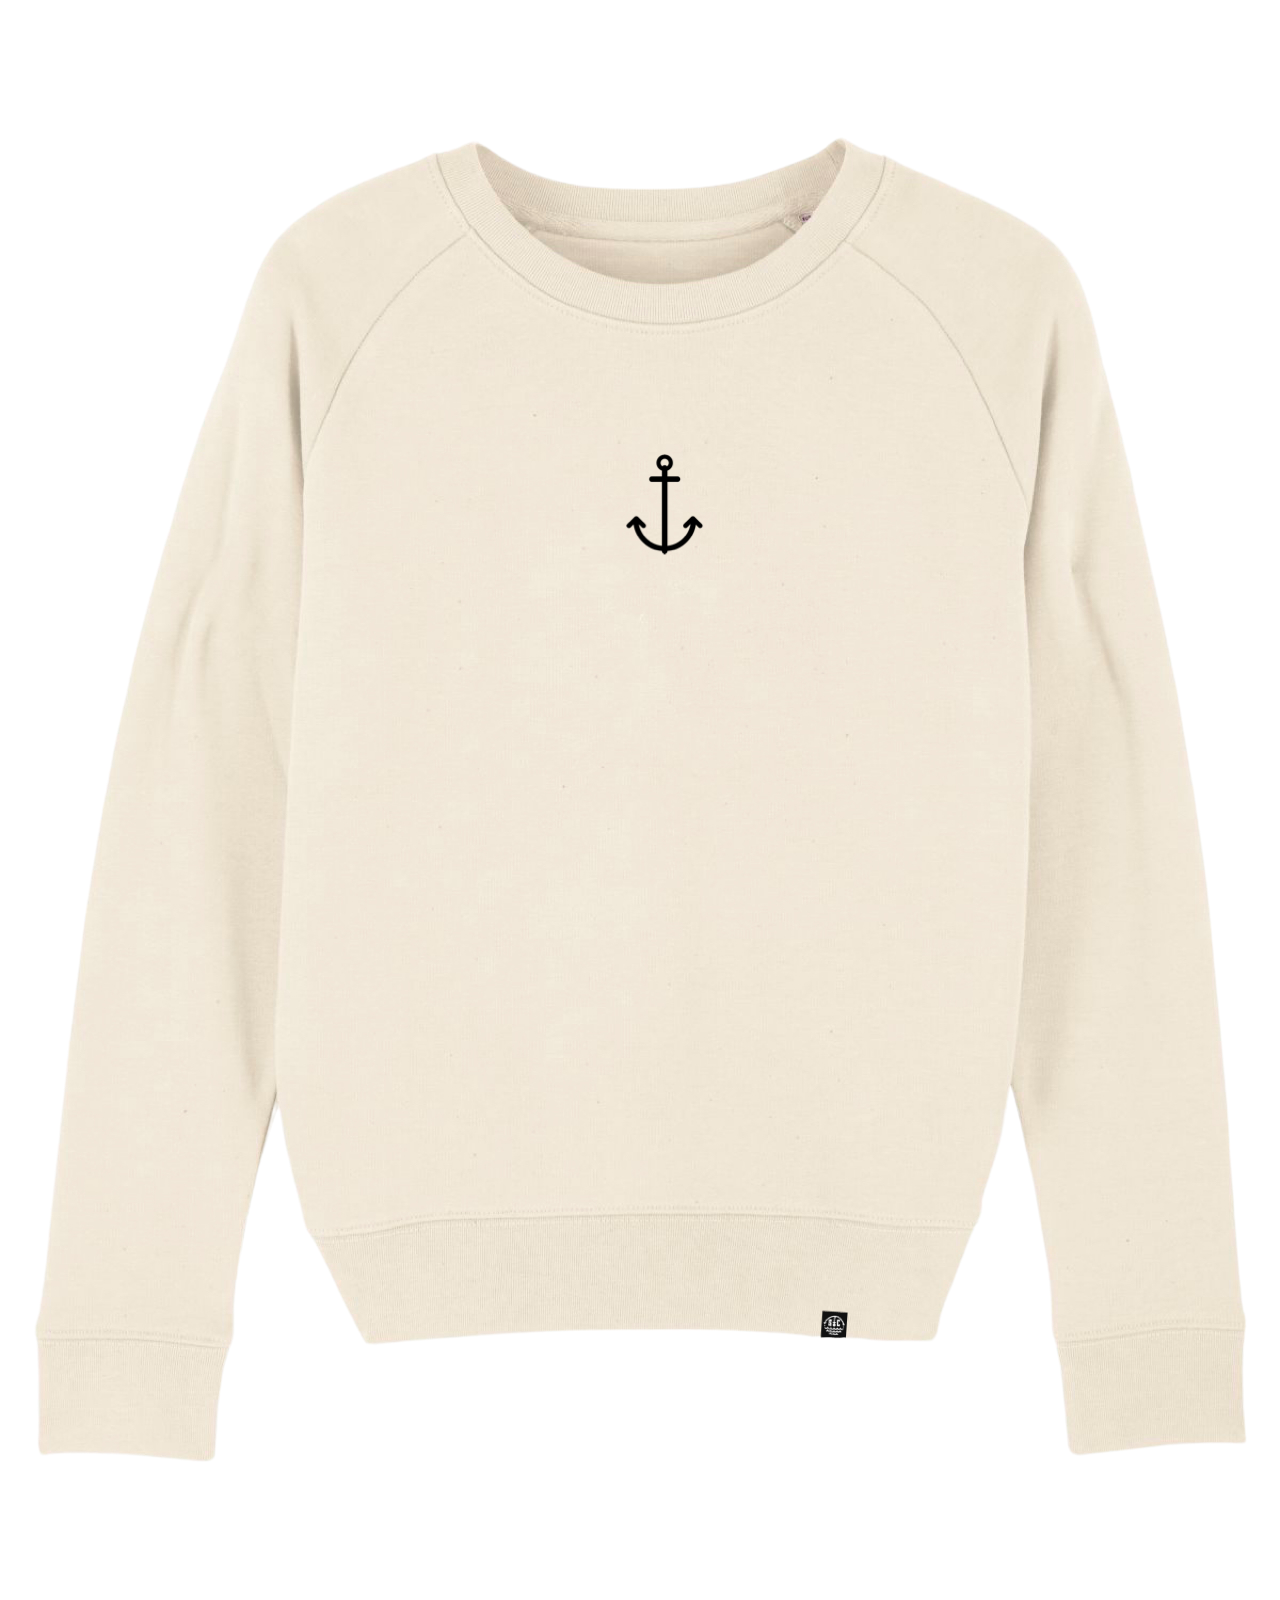 Small anchor women sweatshirt - Seaman&